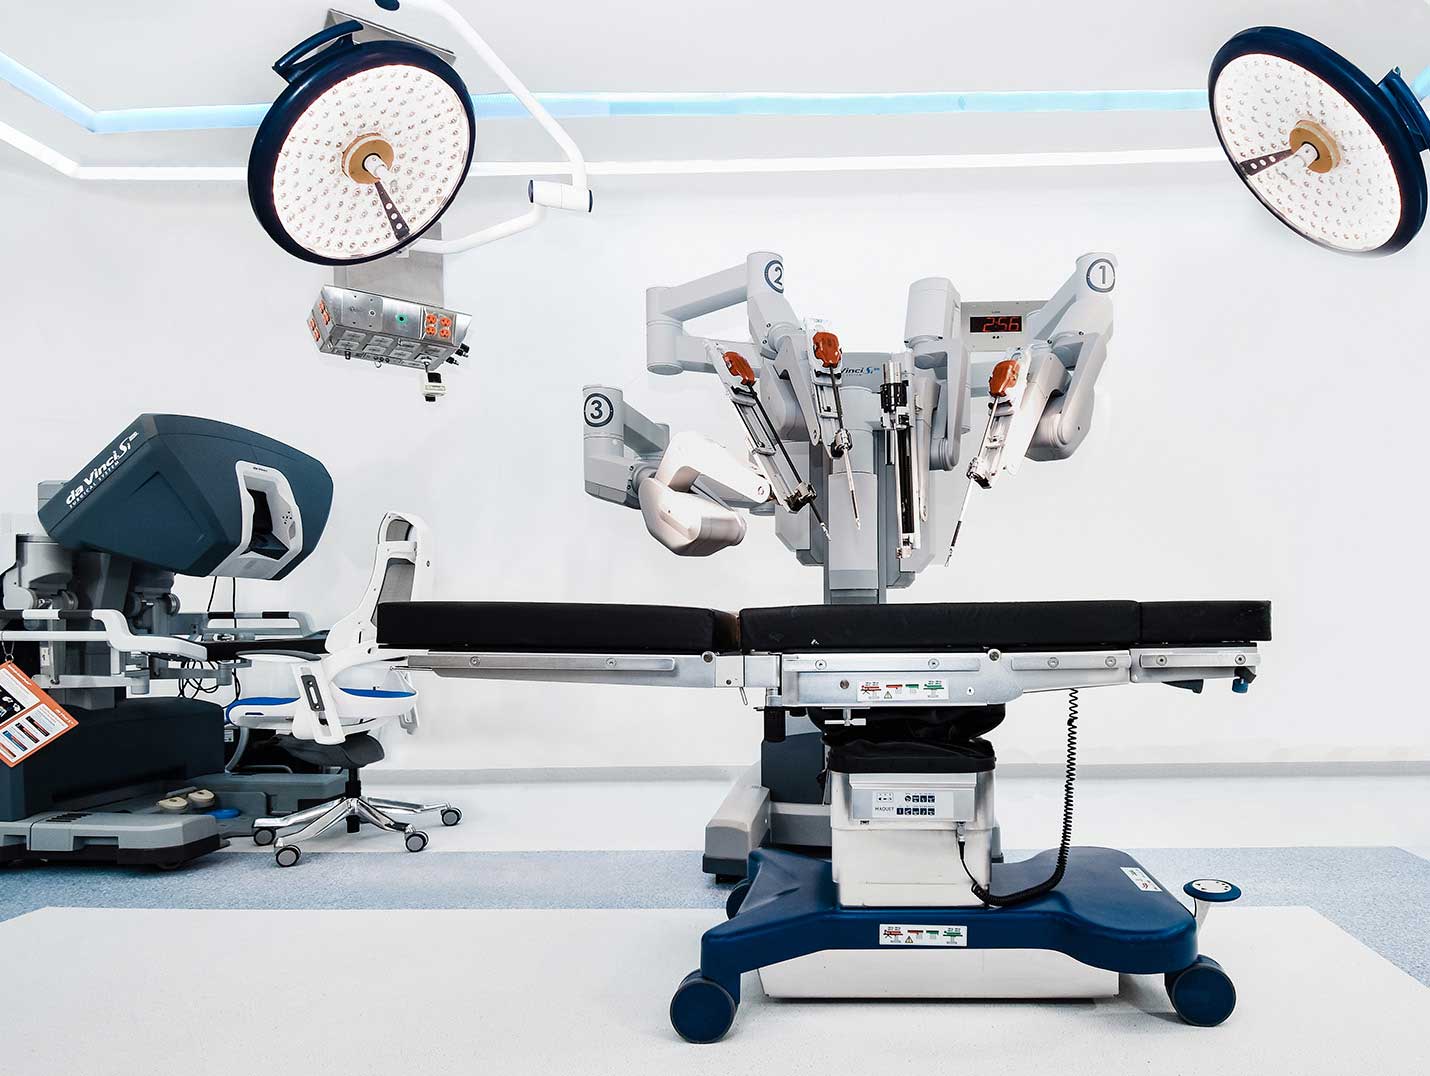 Asistente quirúrgico Da Vinci, con tres brazos mecánicos, camilla quirúrgica, dos lámparas LED y un centro de control